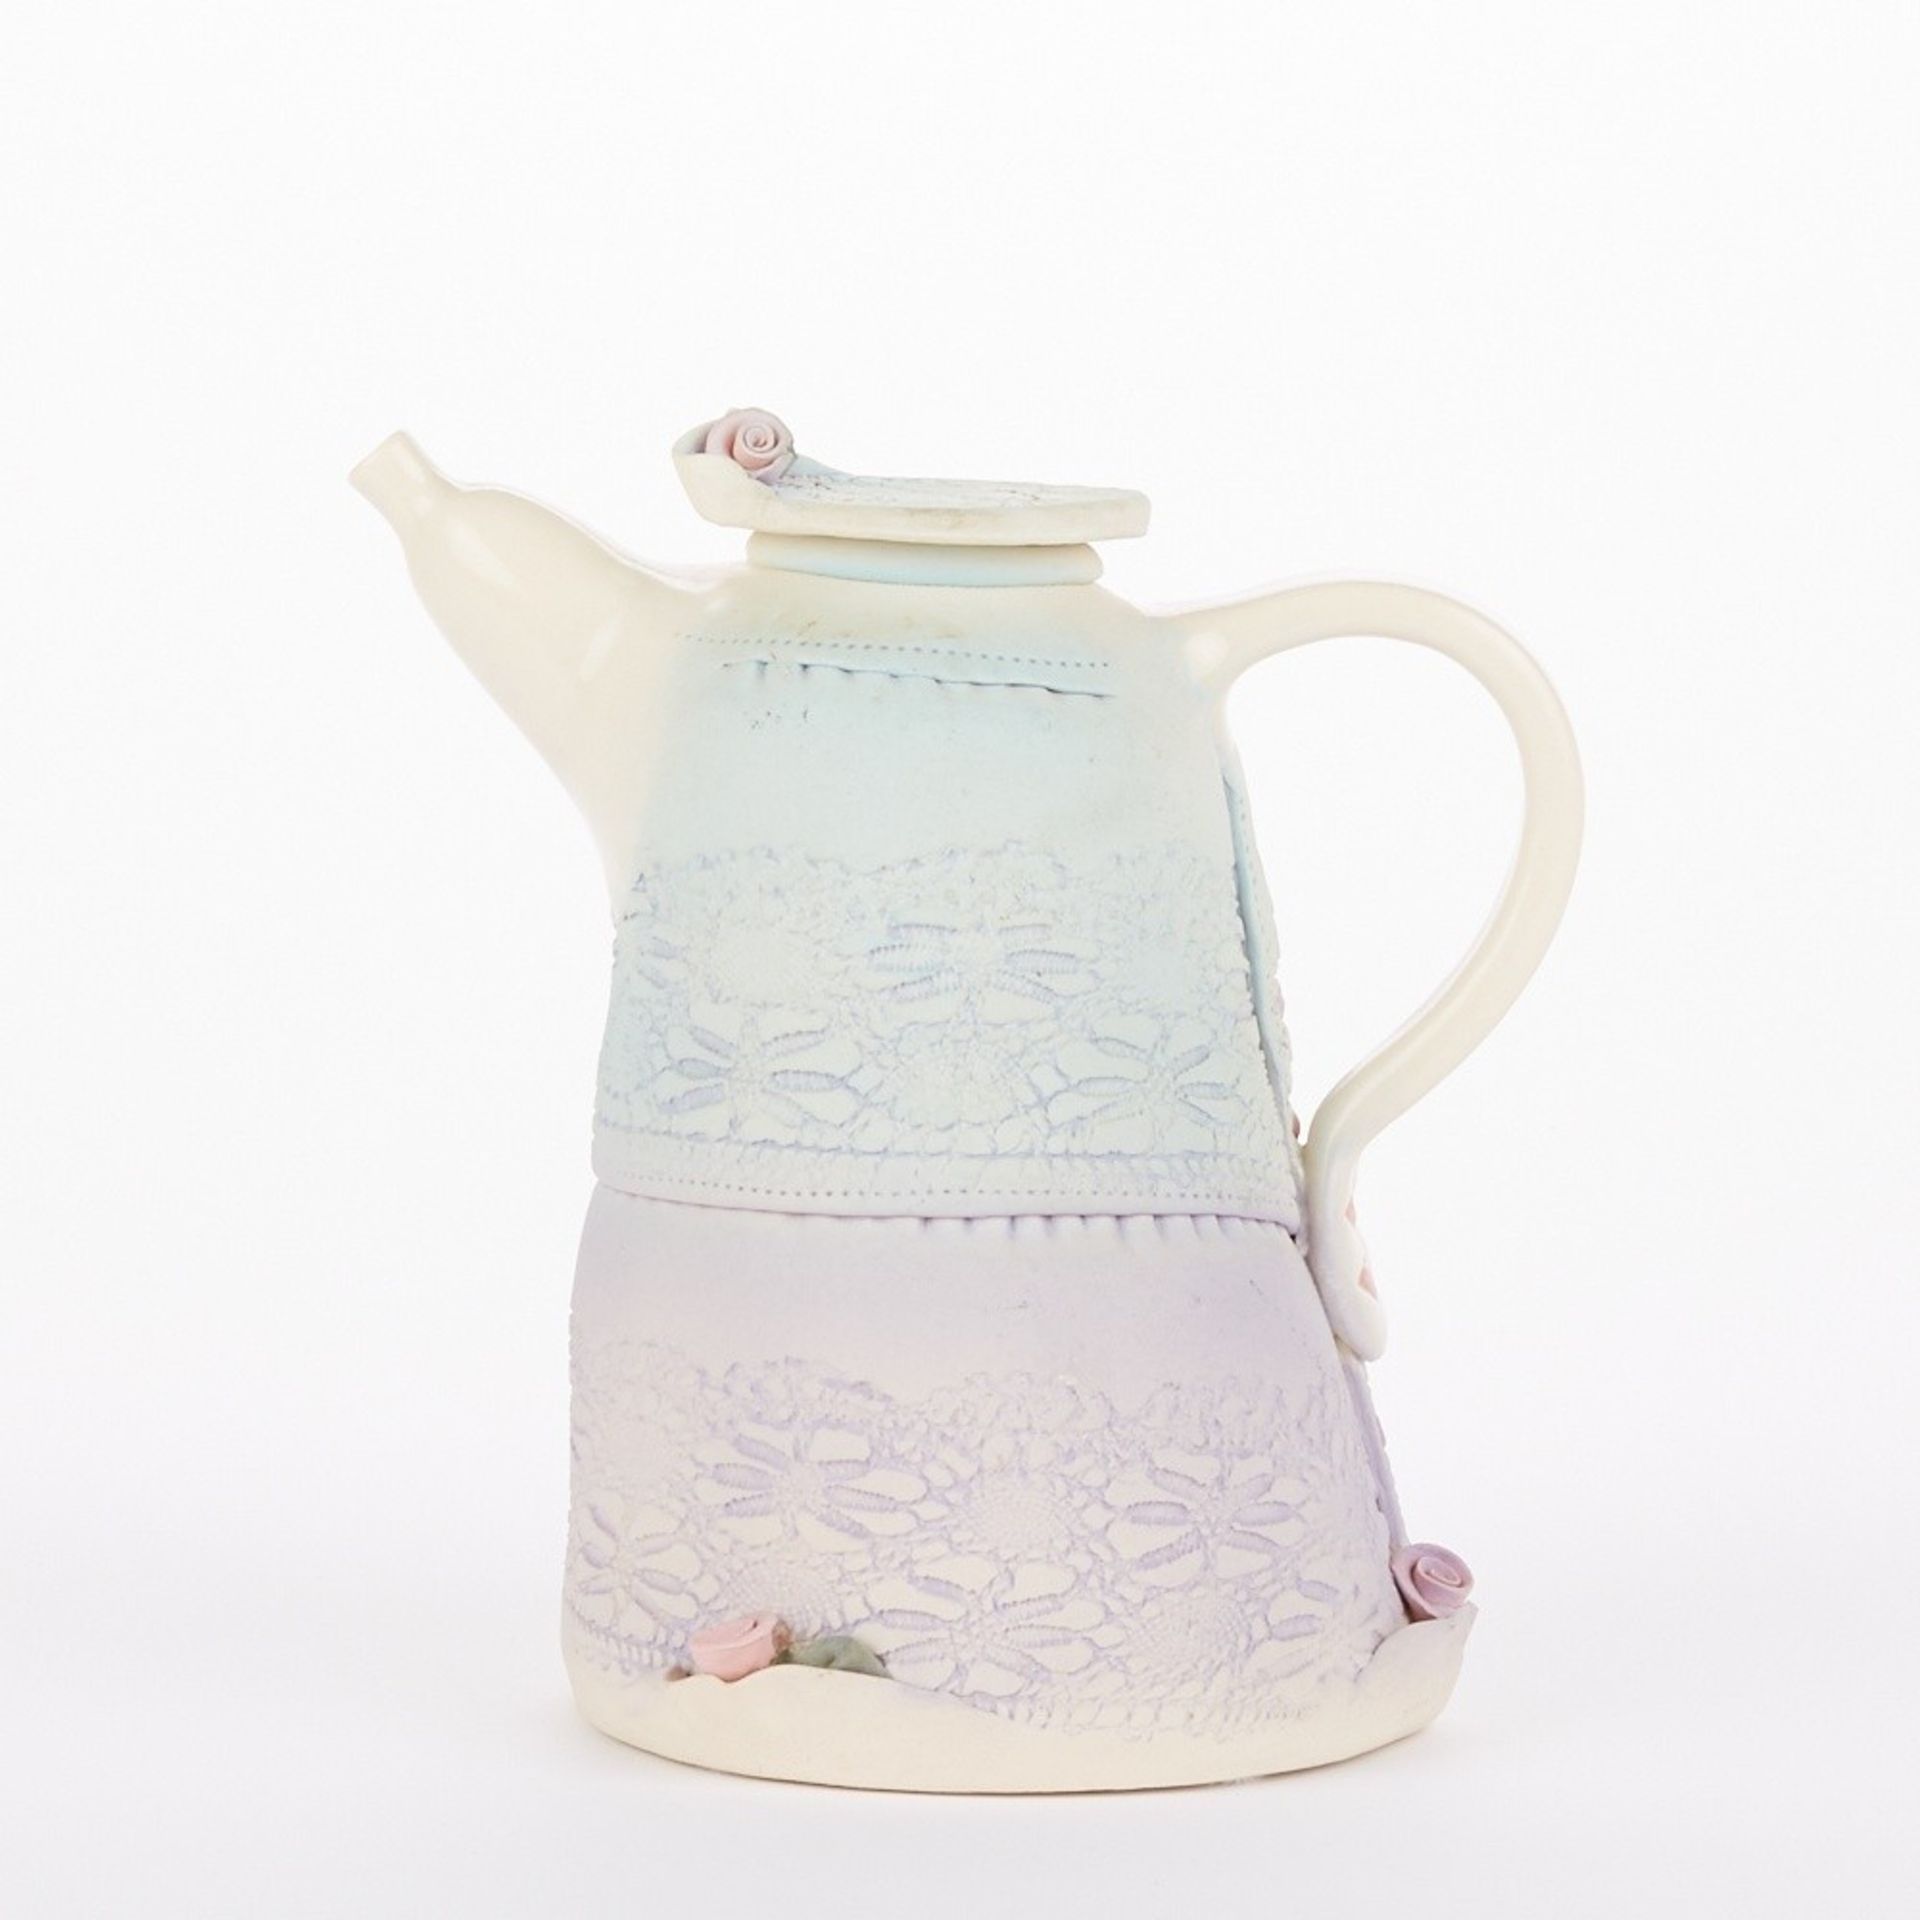 Laura Peery Porcelain Teapot - Image 3 of 6